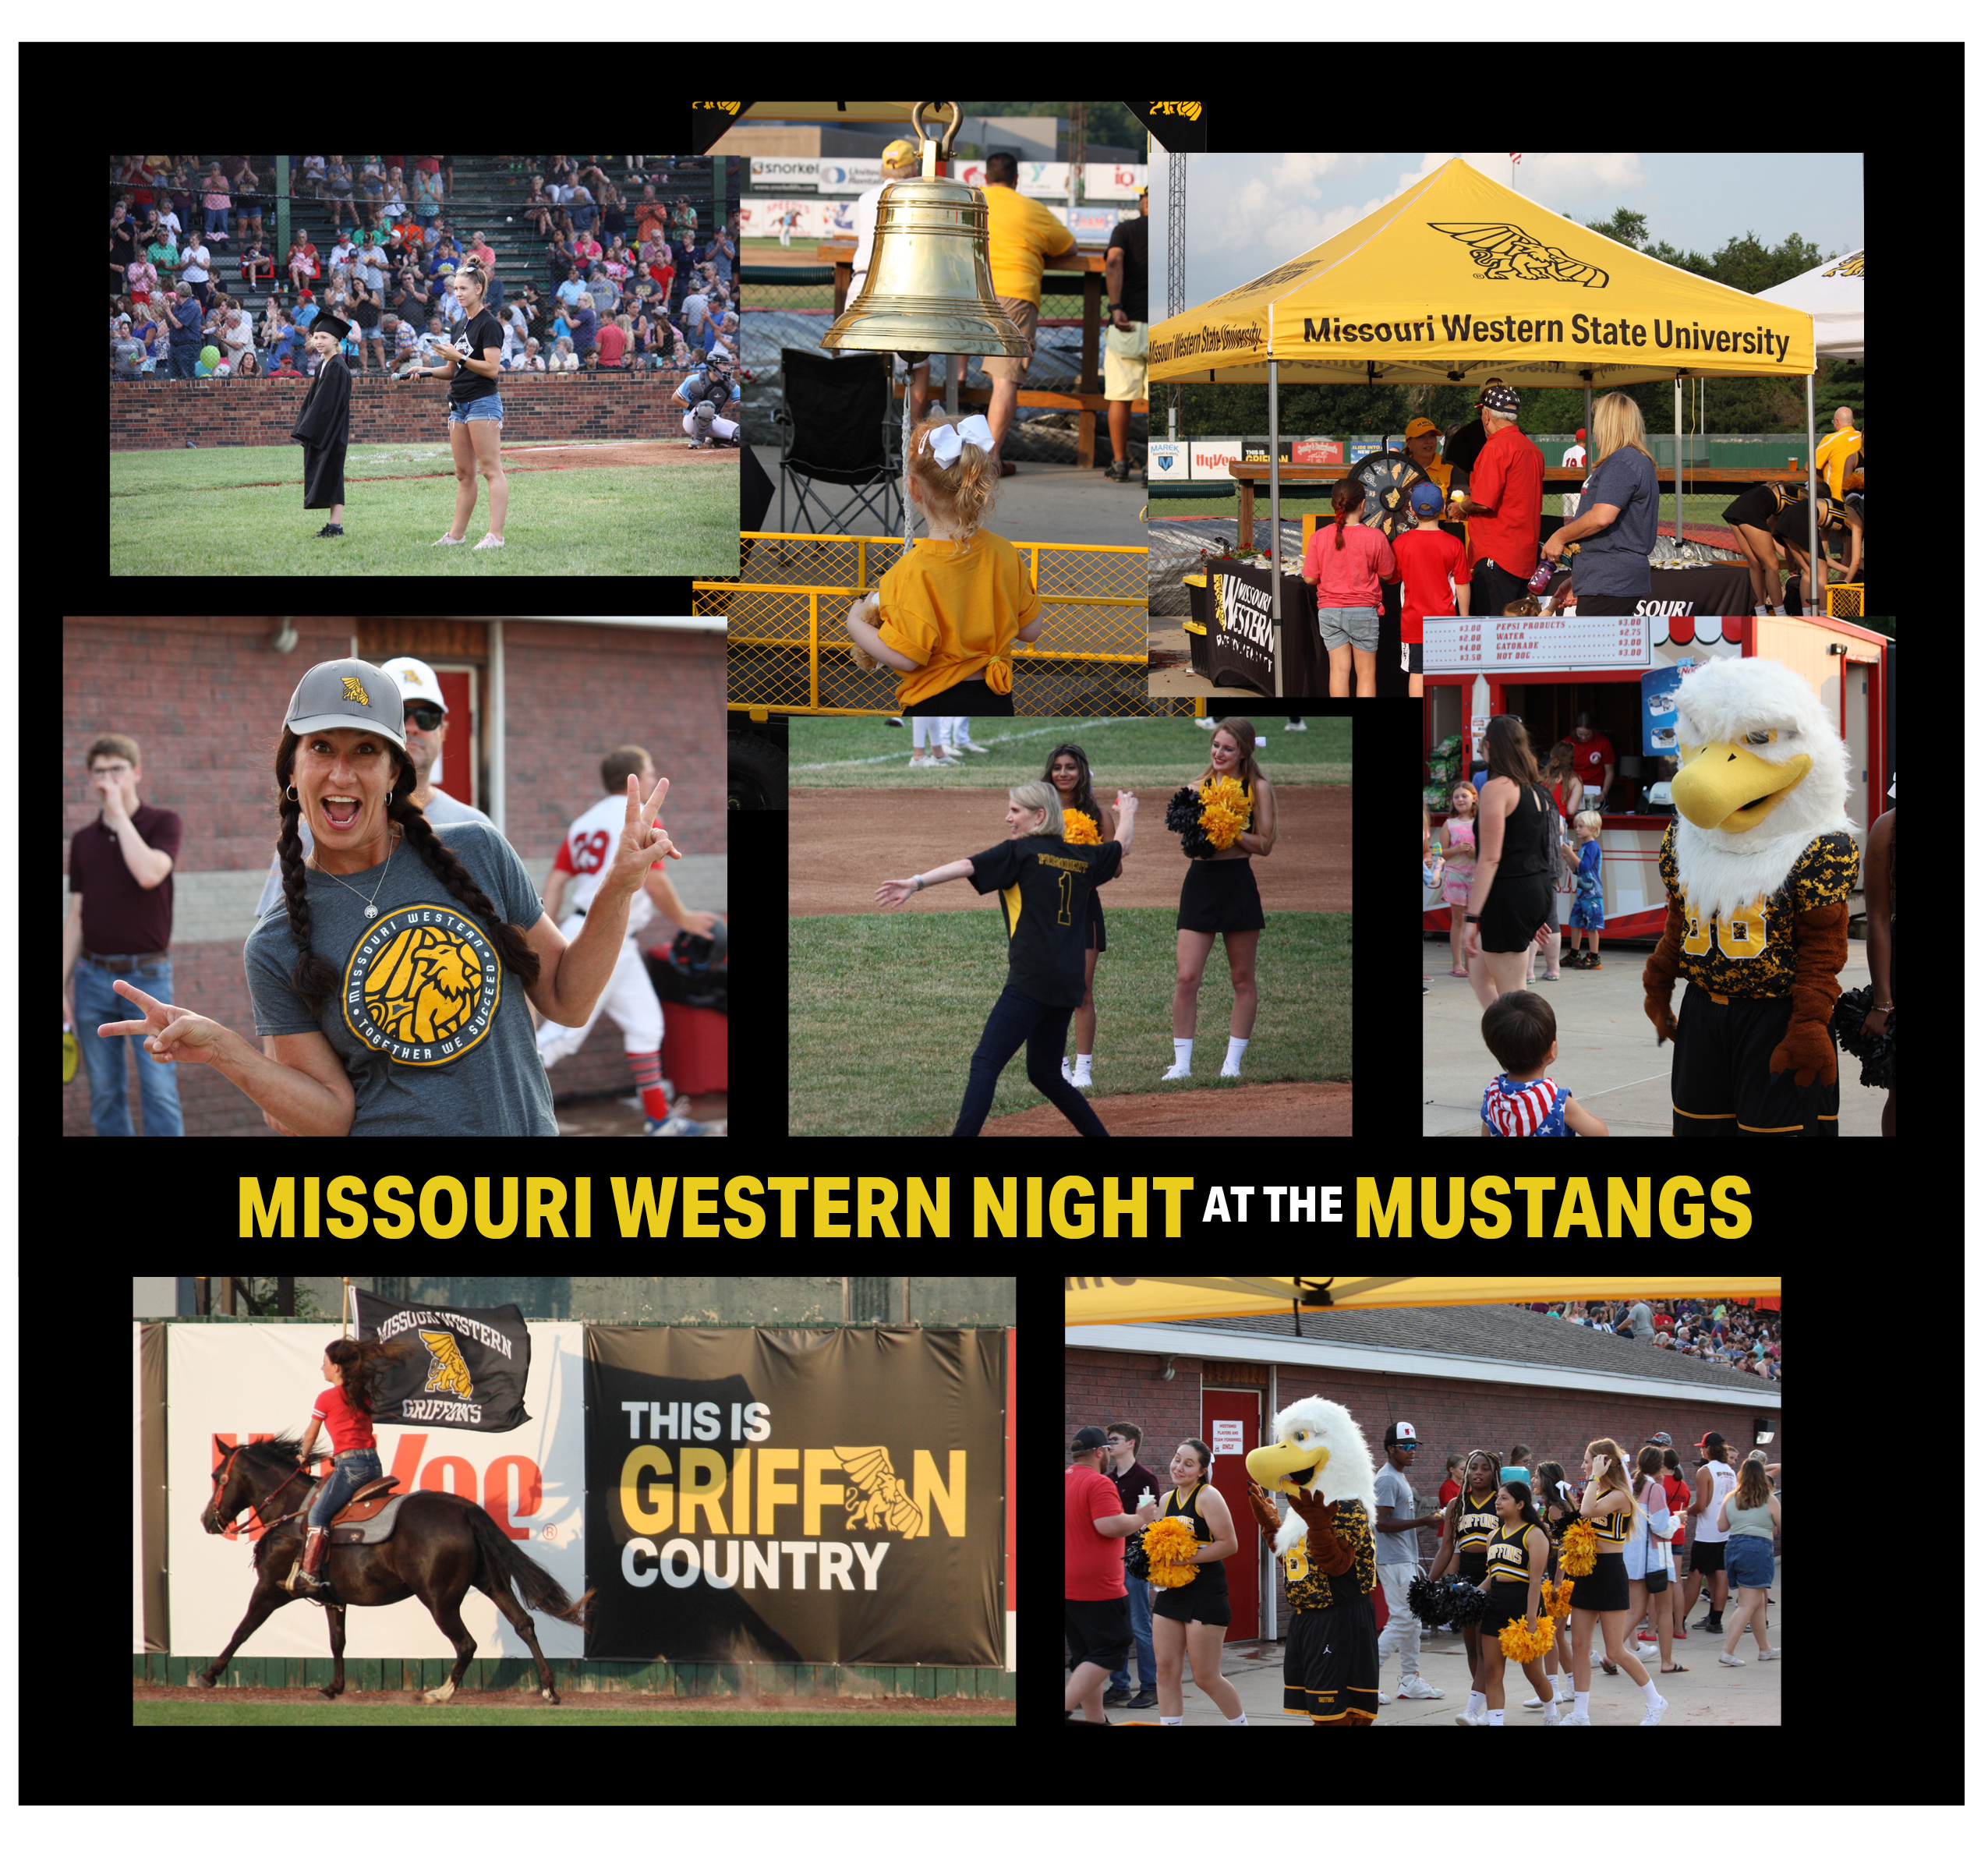 Missouri Western Night at the Mustangs